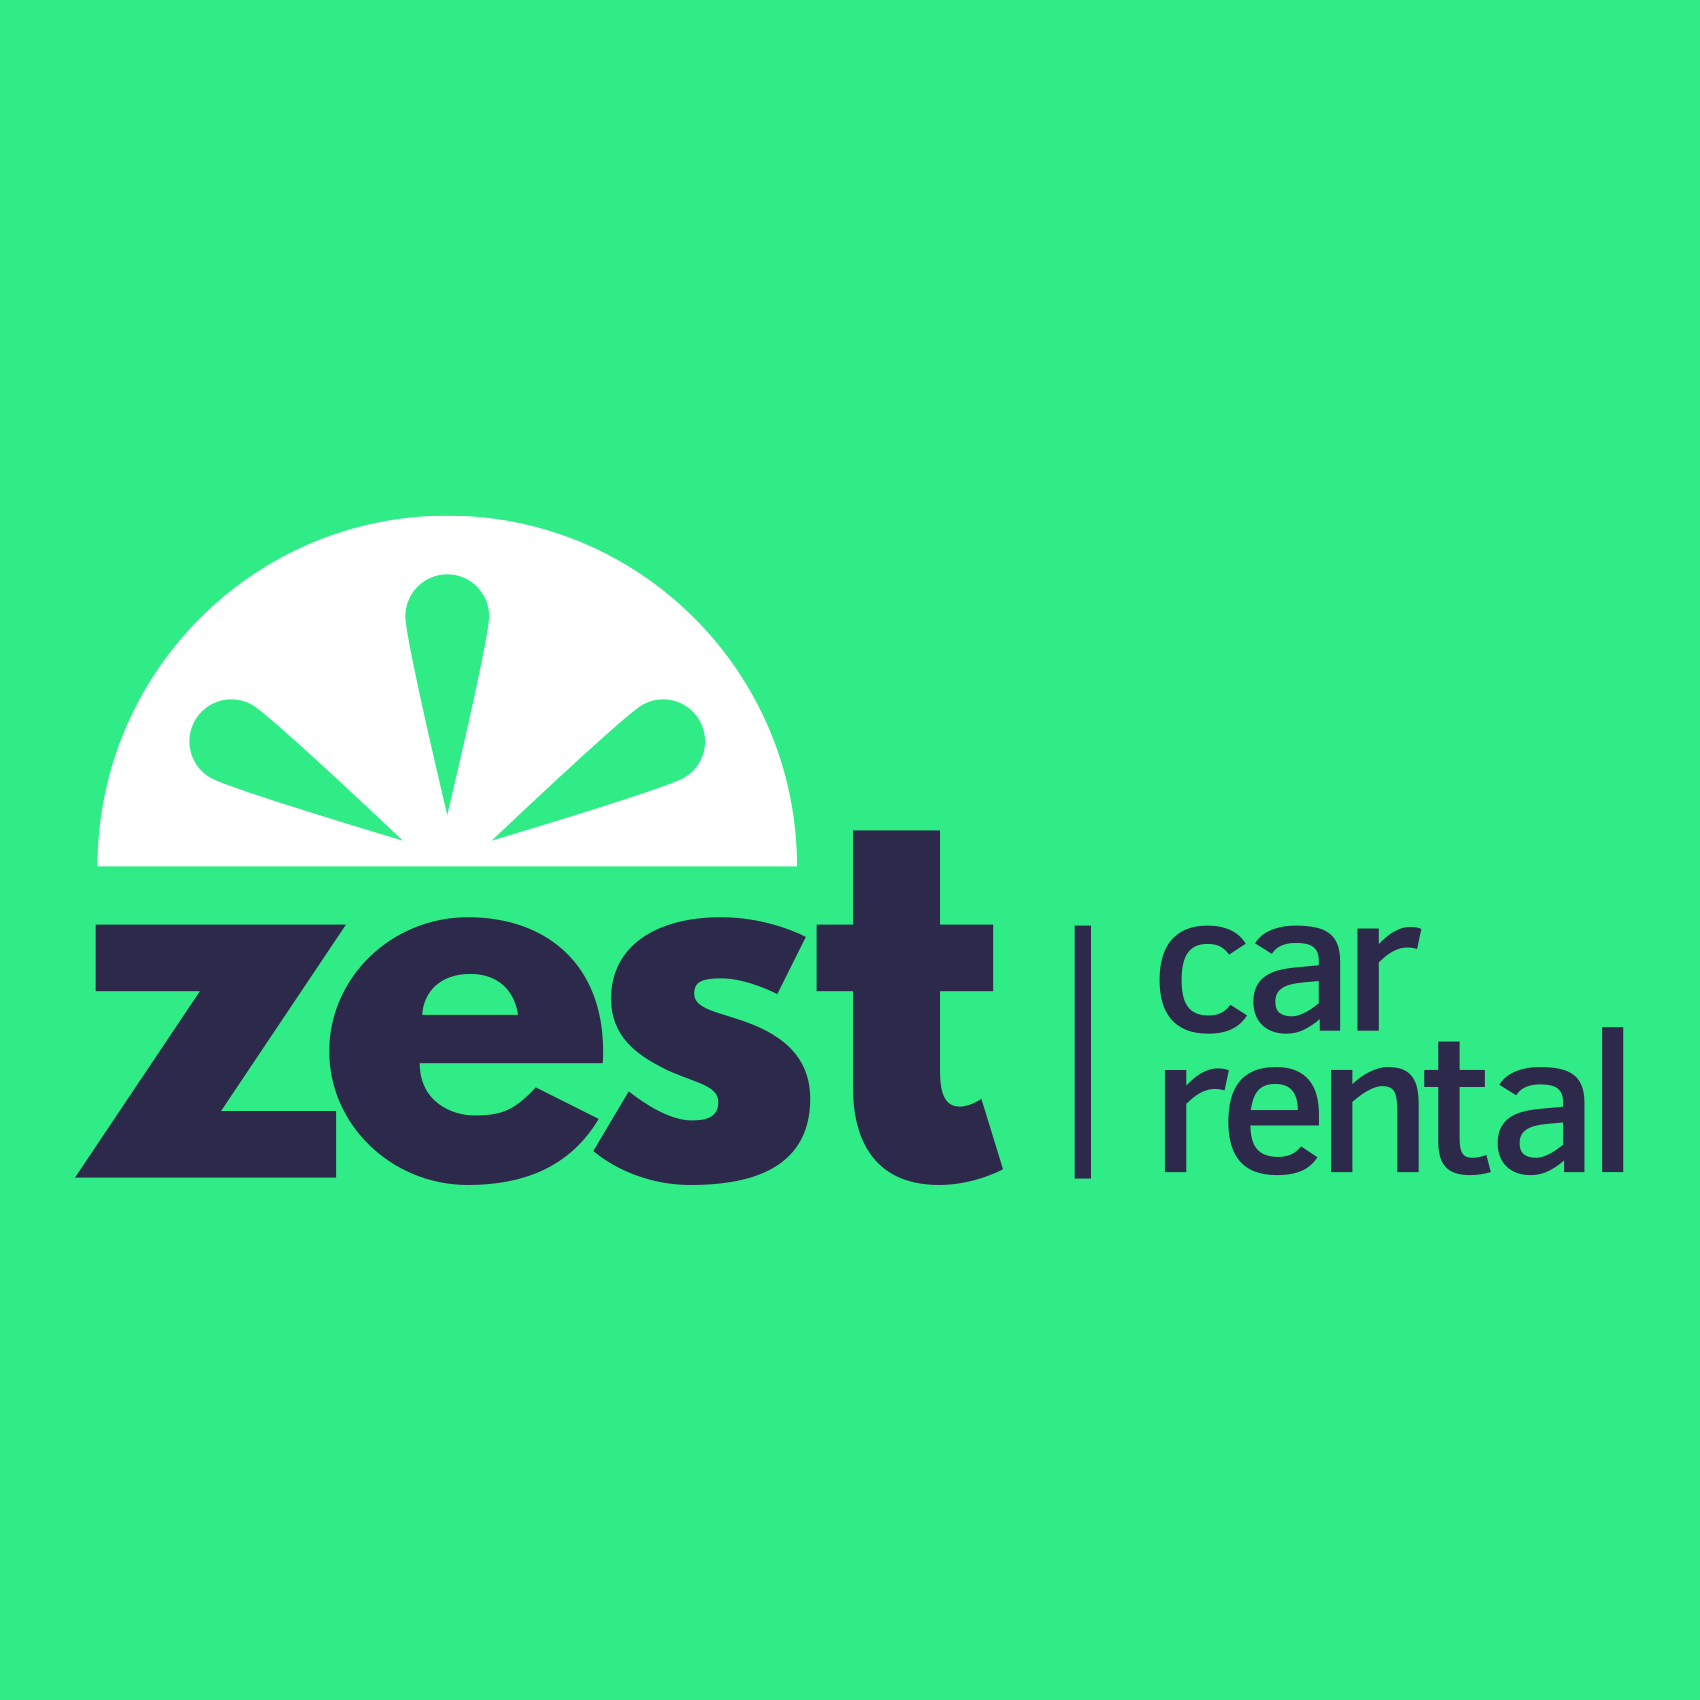 Zest Car Rental Coupons & Promo Codes